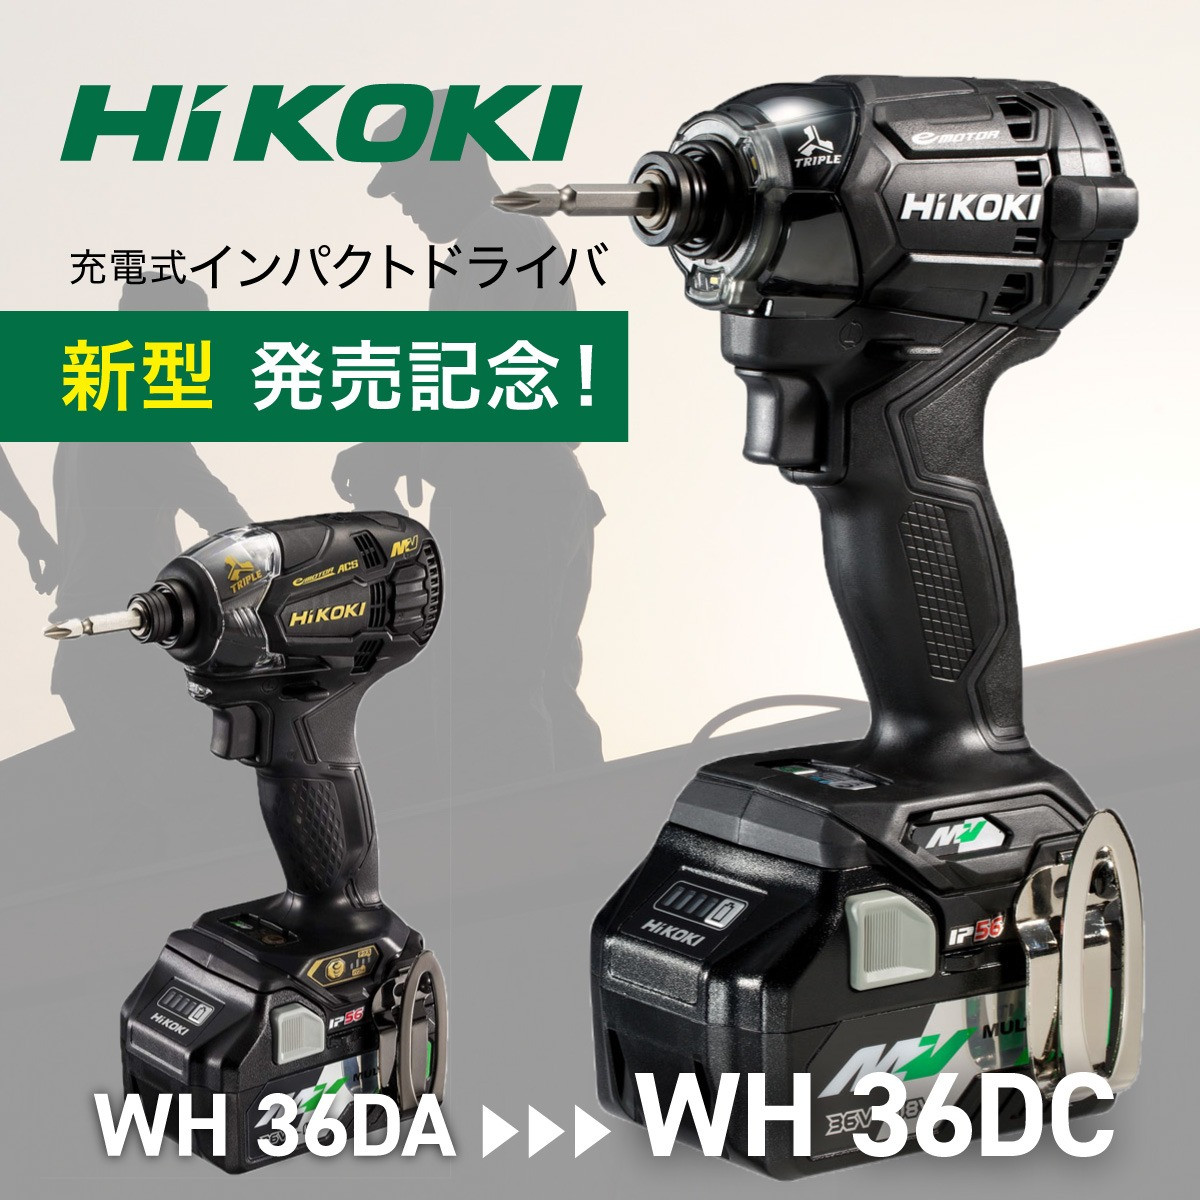 HiKOKI ハイコーキ インパクトドライバ新型発売記念で旧型モデルが安い